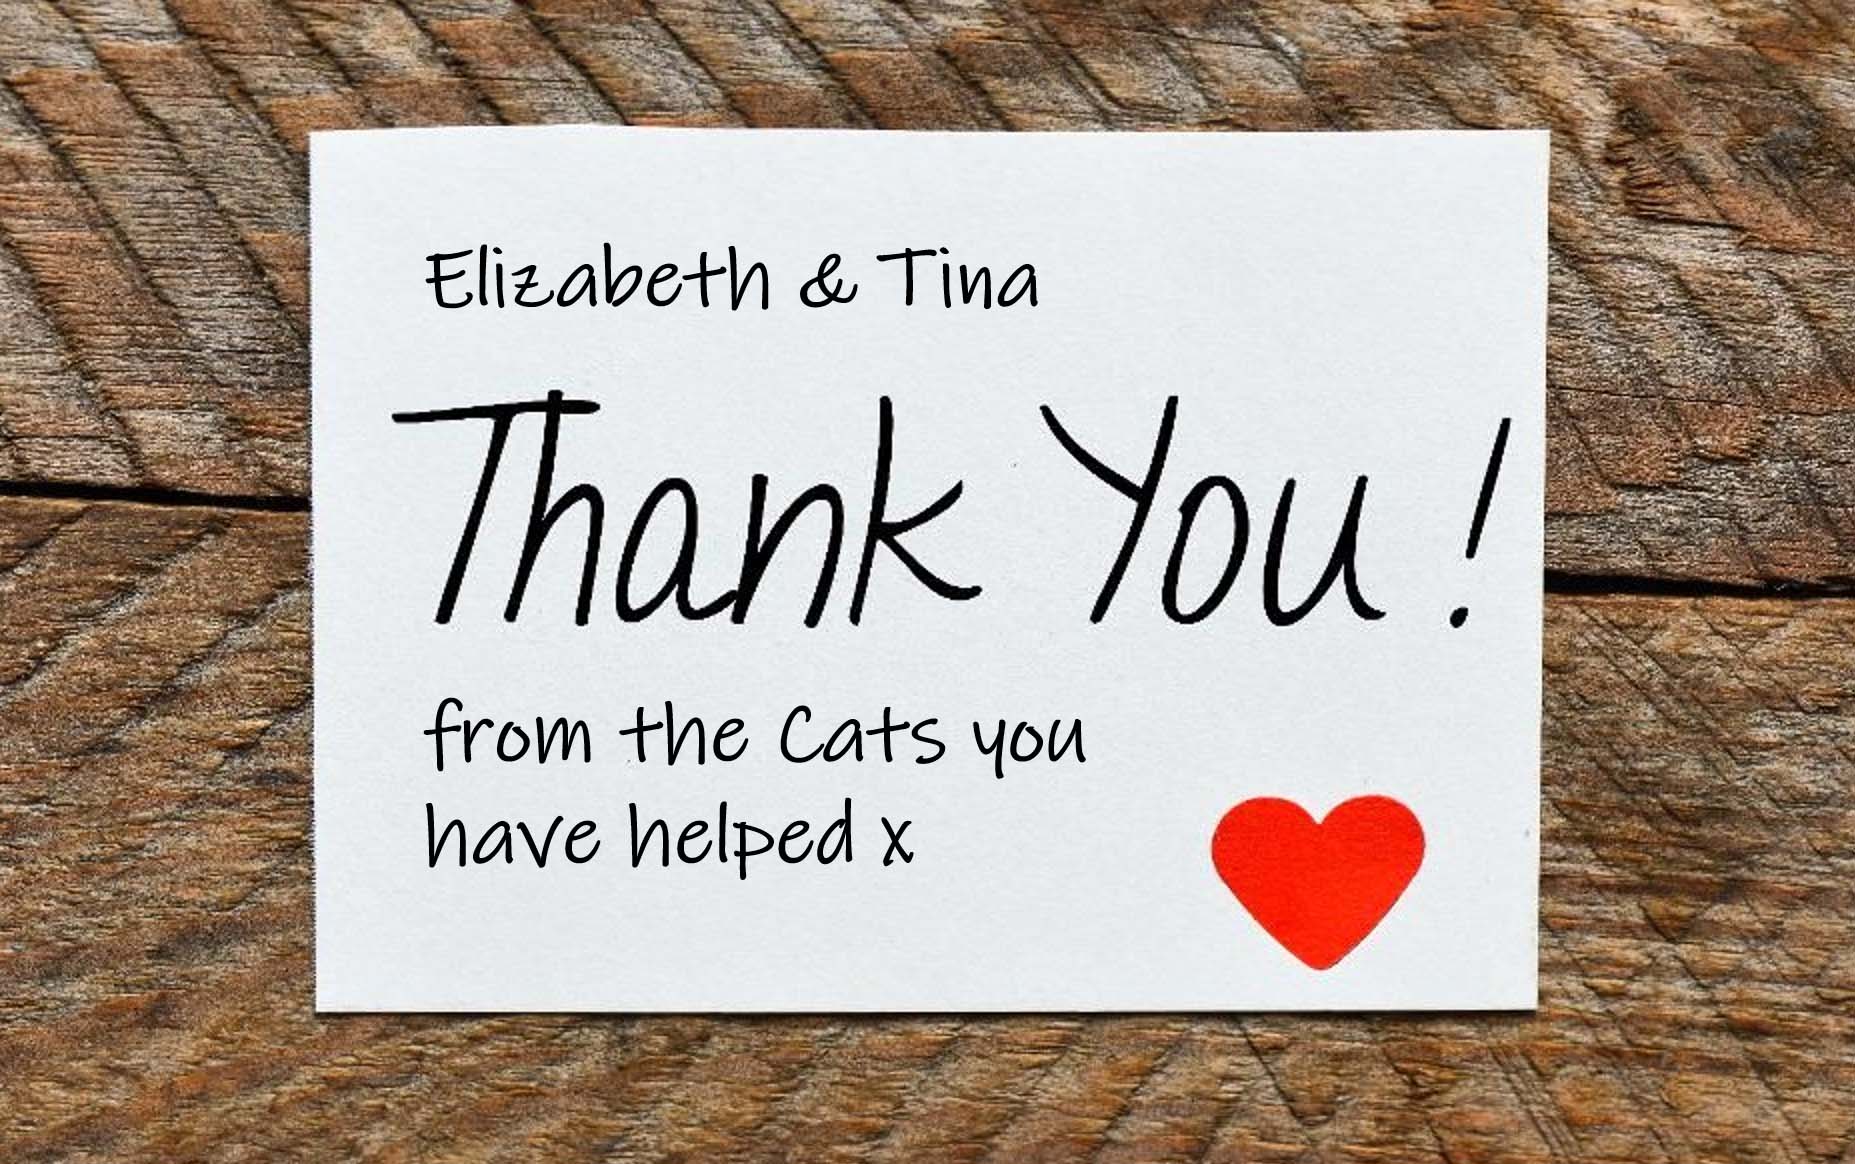 Thank You Elizabeth and Tina